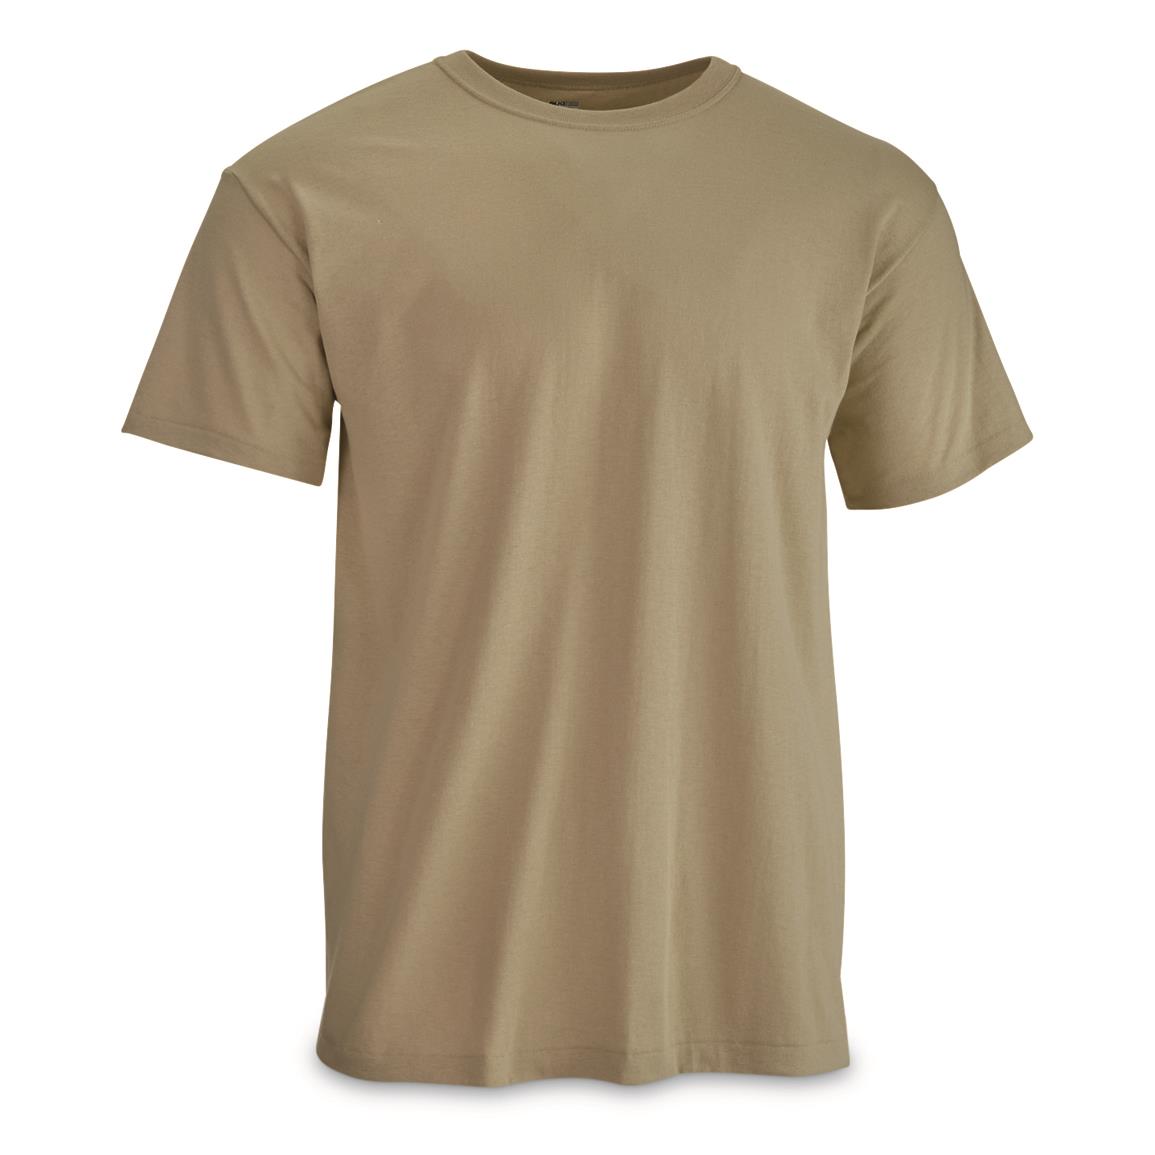 U.S. Military Surplus T-Shirts, 3 Pack, New, Sand